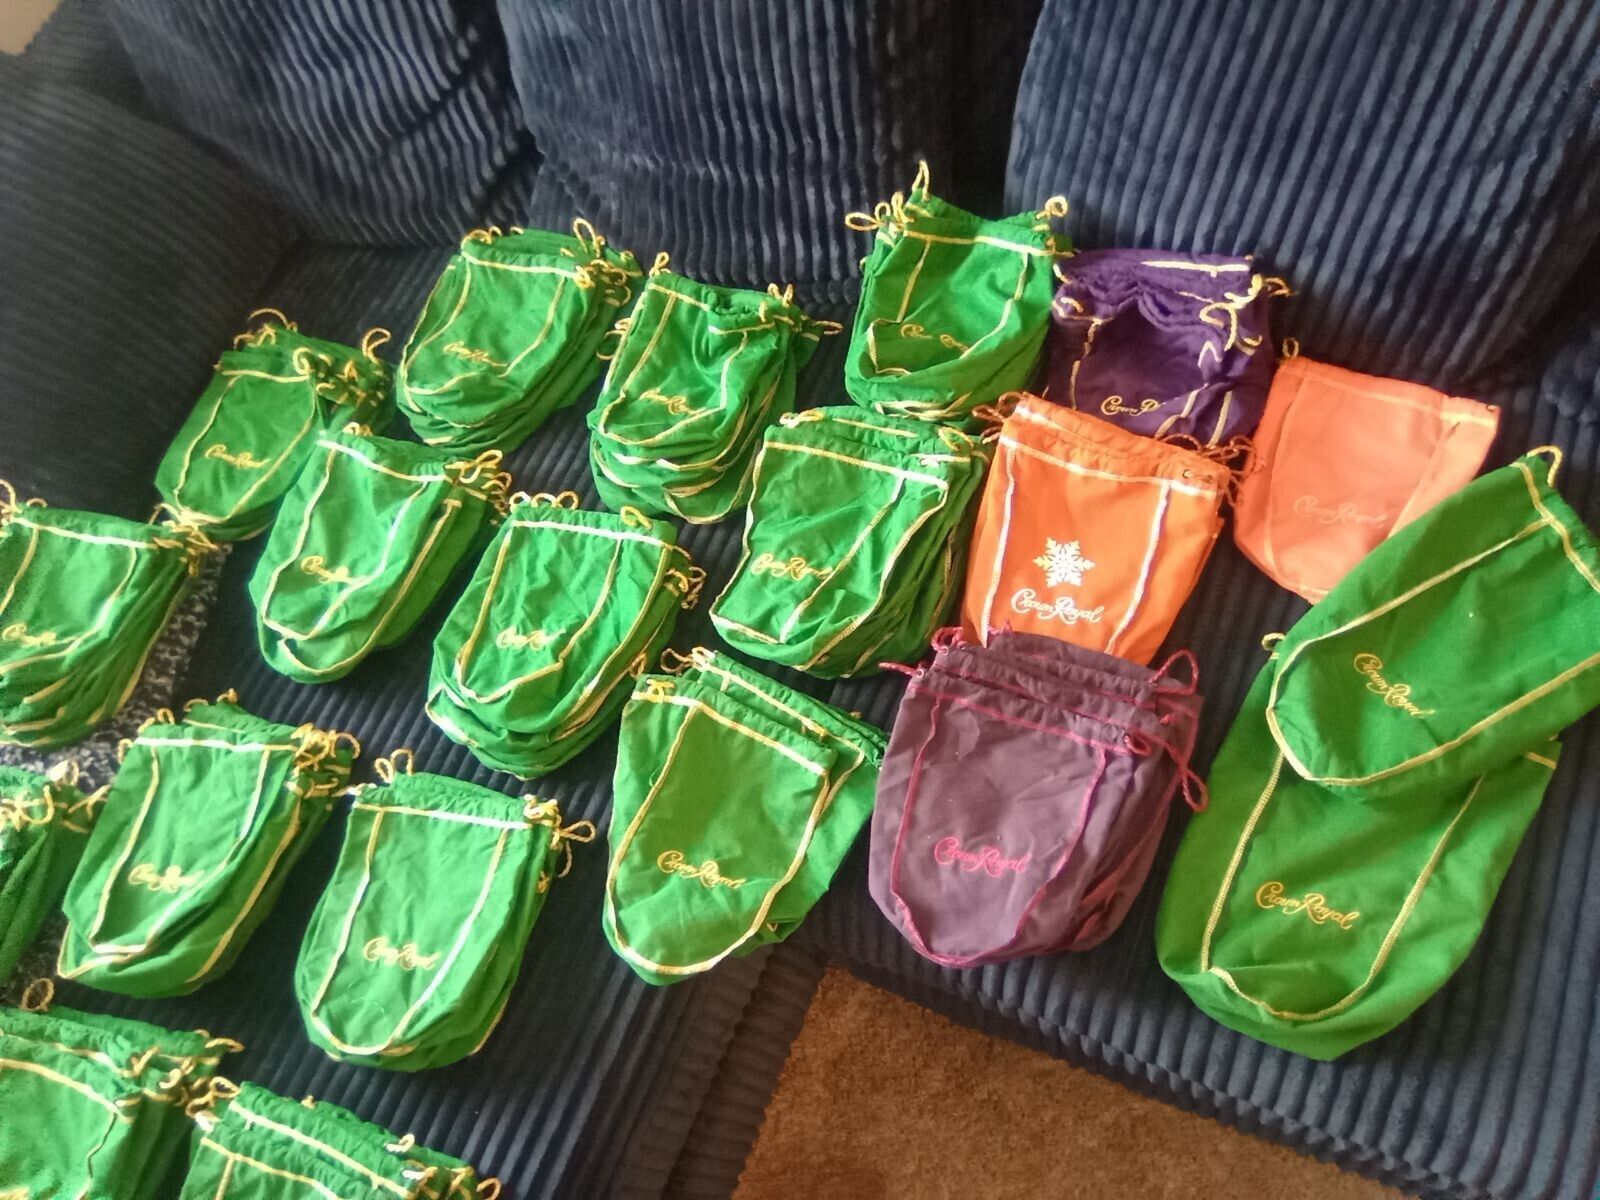 210 Crown Royal Bags